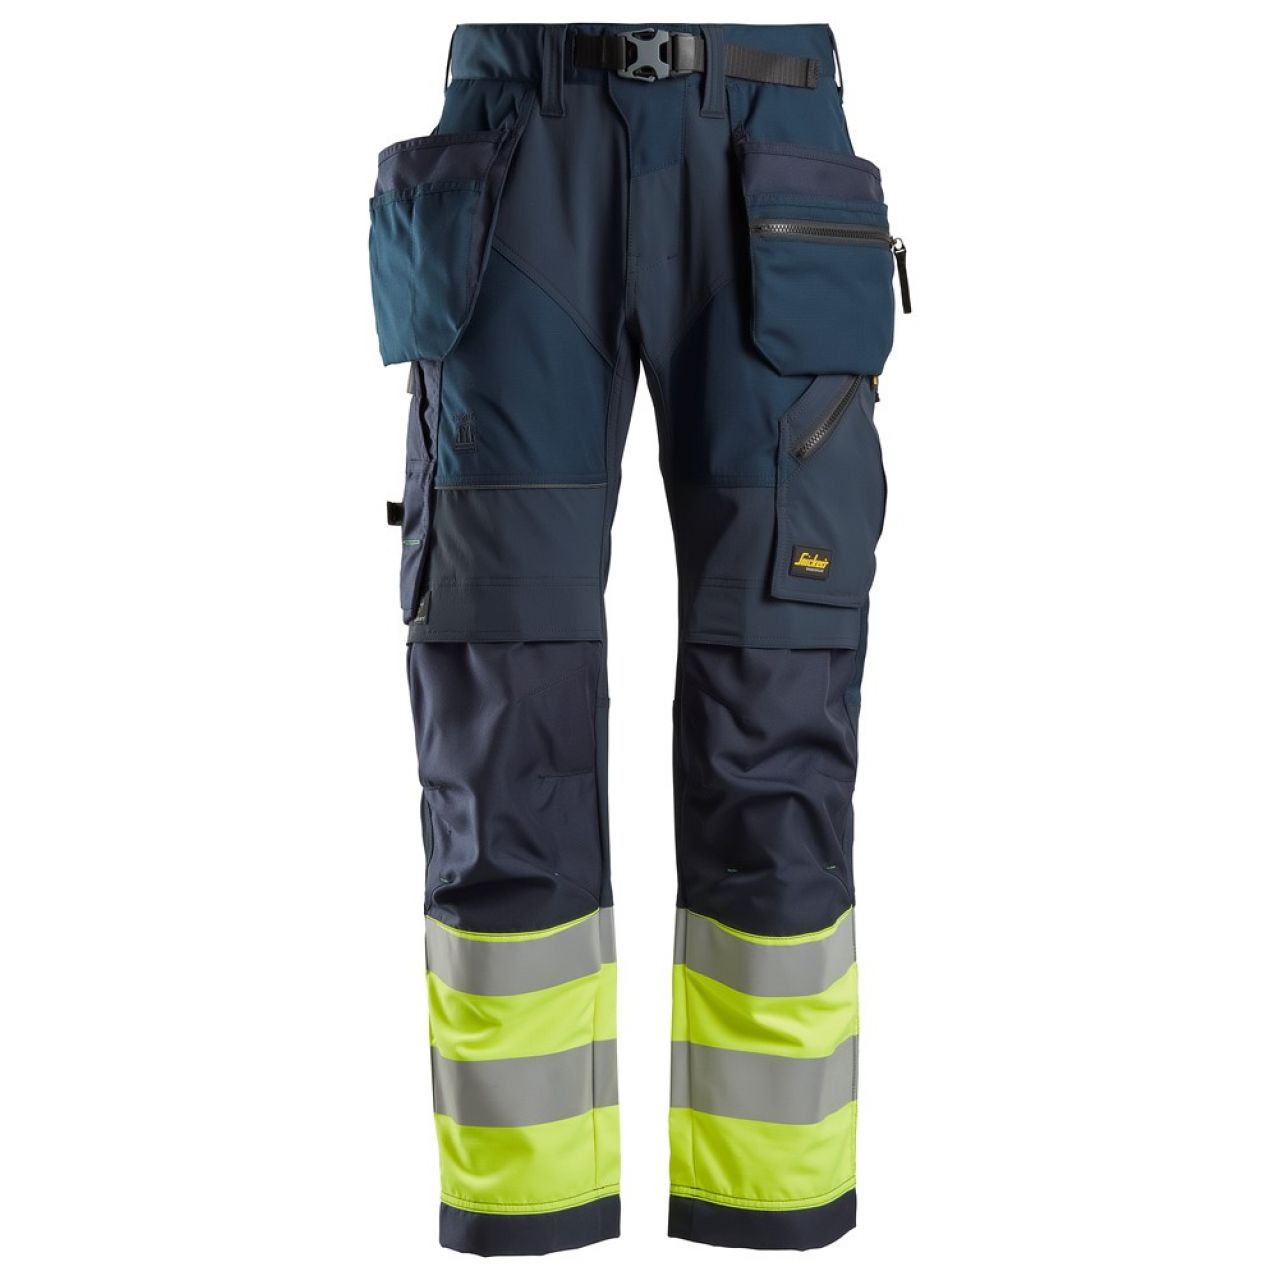 6931 Pantalones largos de trabajo de alta visibilidad clase 1 con bolsillos flotantes FlexiWork azul marino-amarillo talla 108